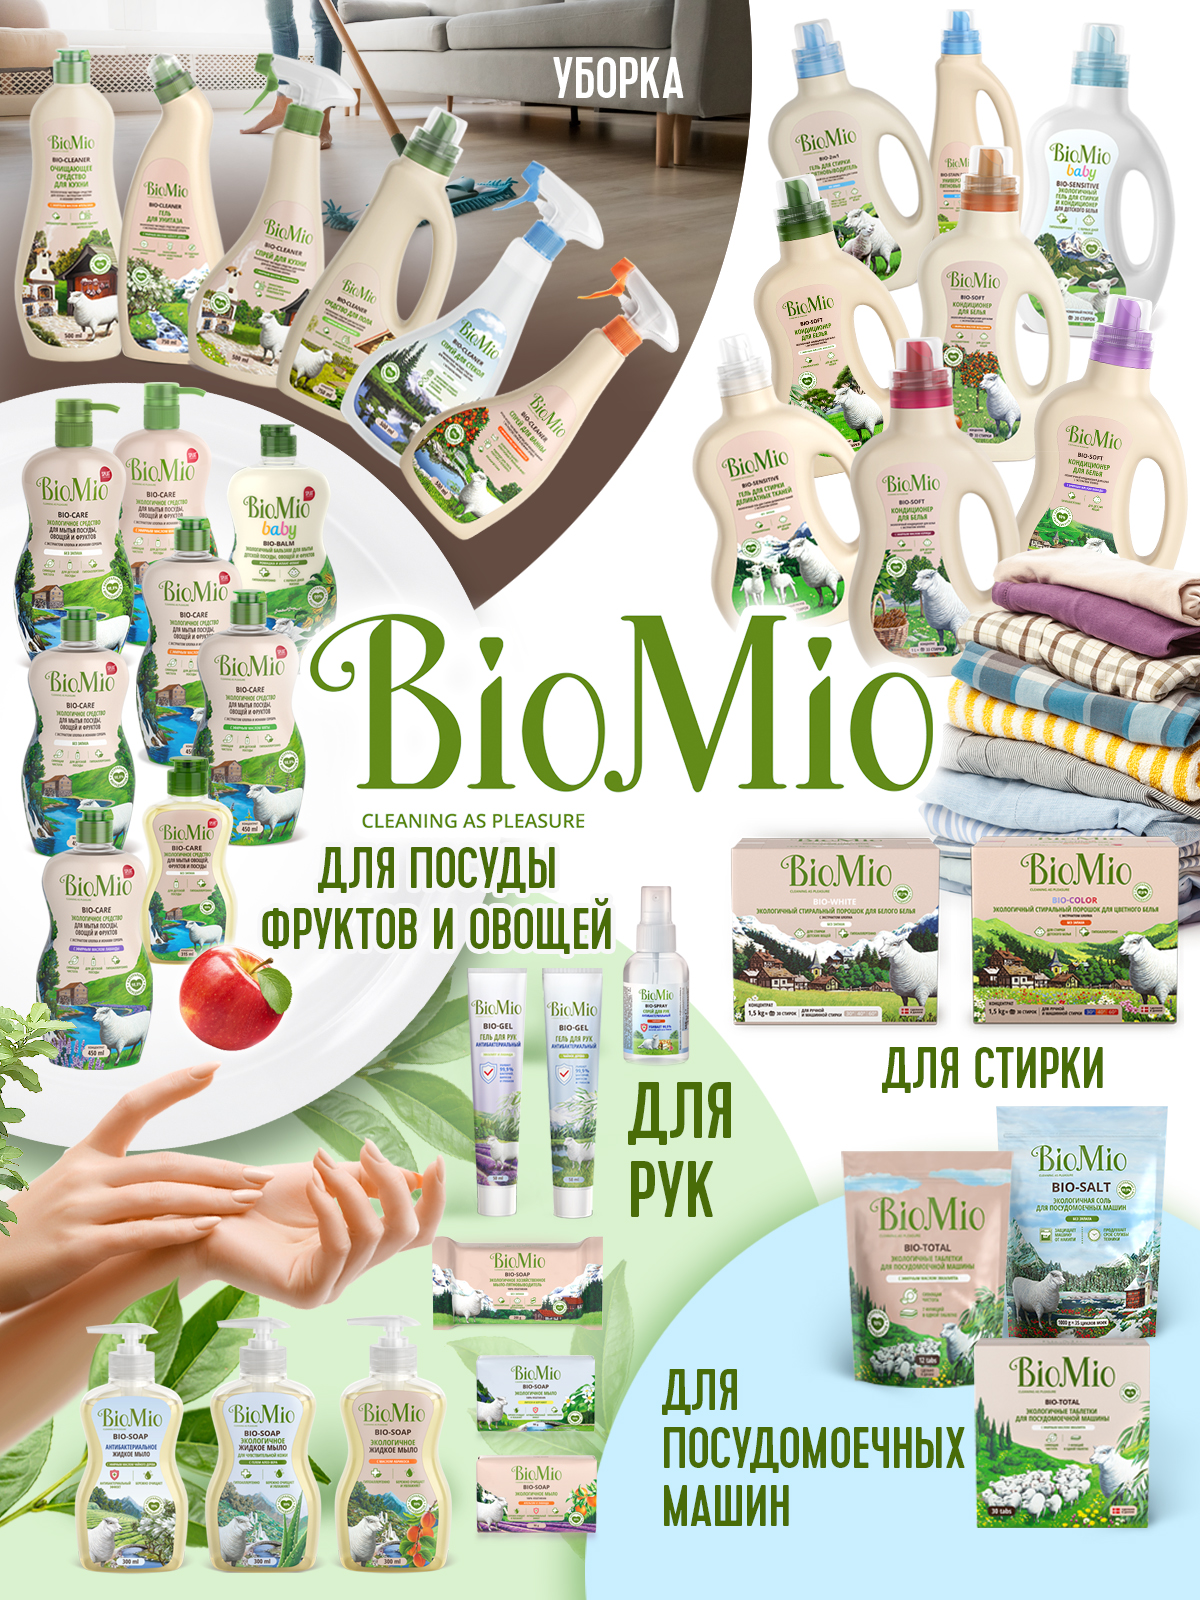 Пральний порошок для кольорової білизни BioMio Bio-Color, концентрат, 1,5 кг - фото 7